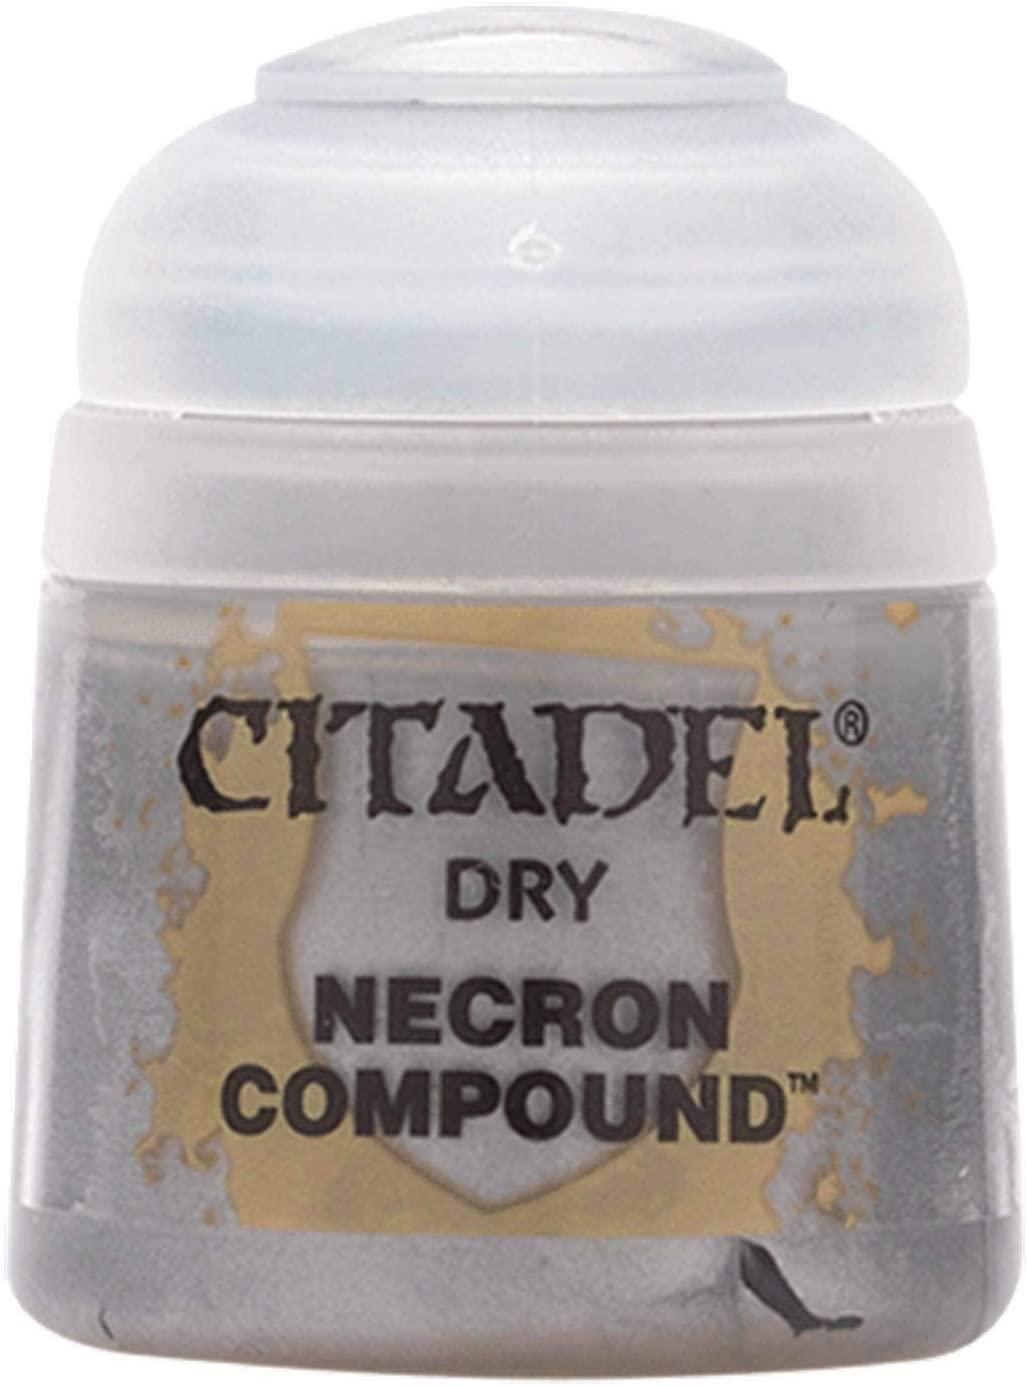 Citadel Drybrush: Necron Compound